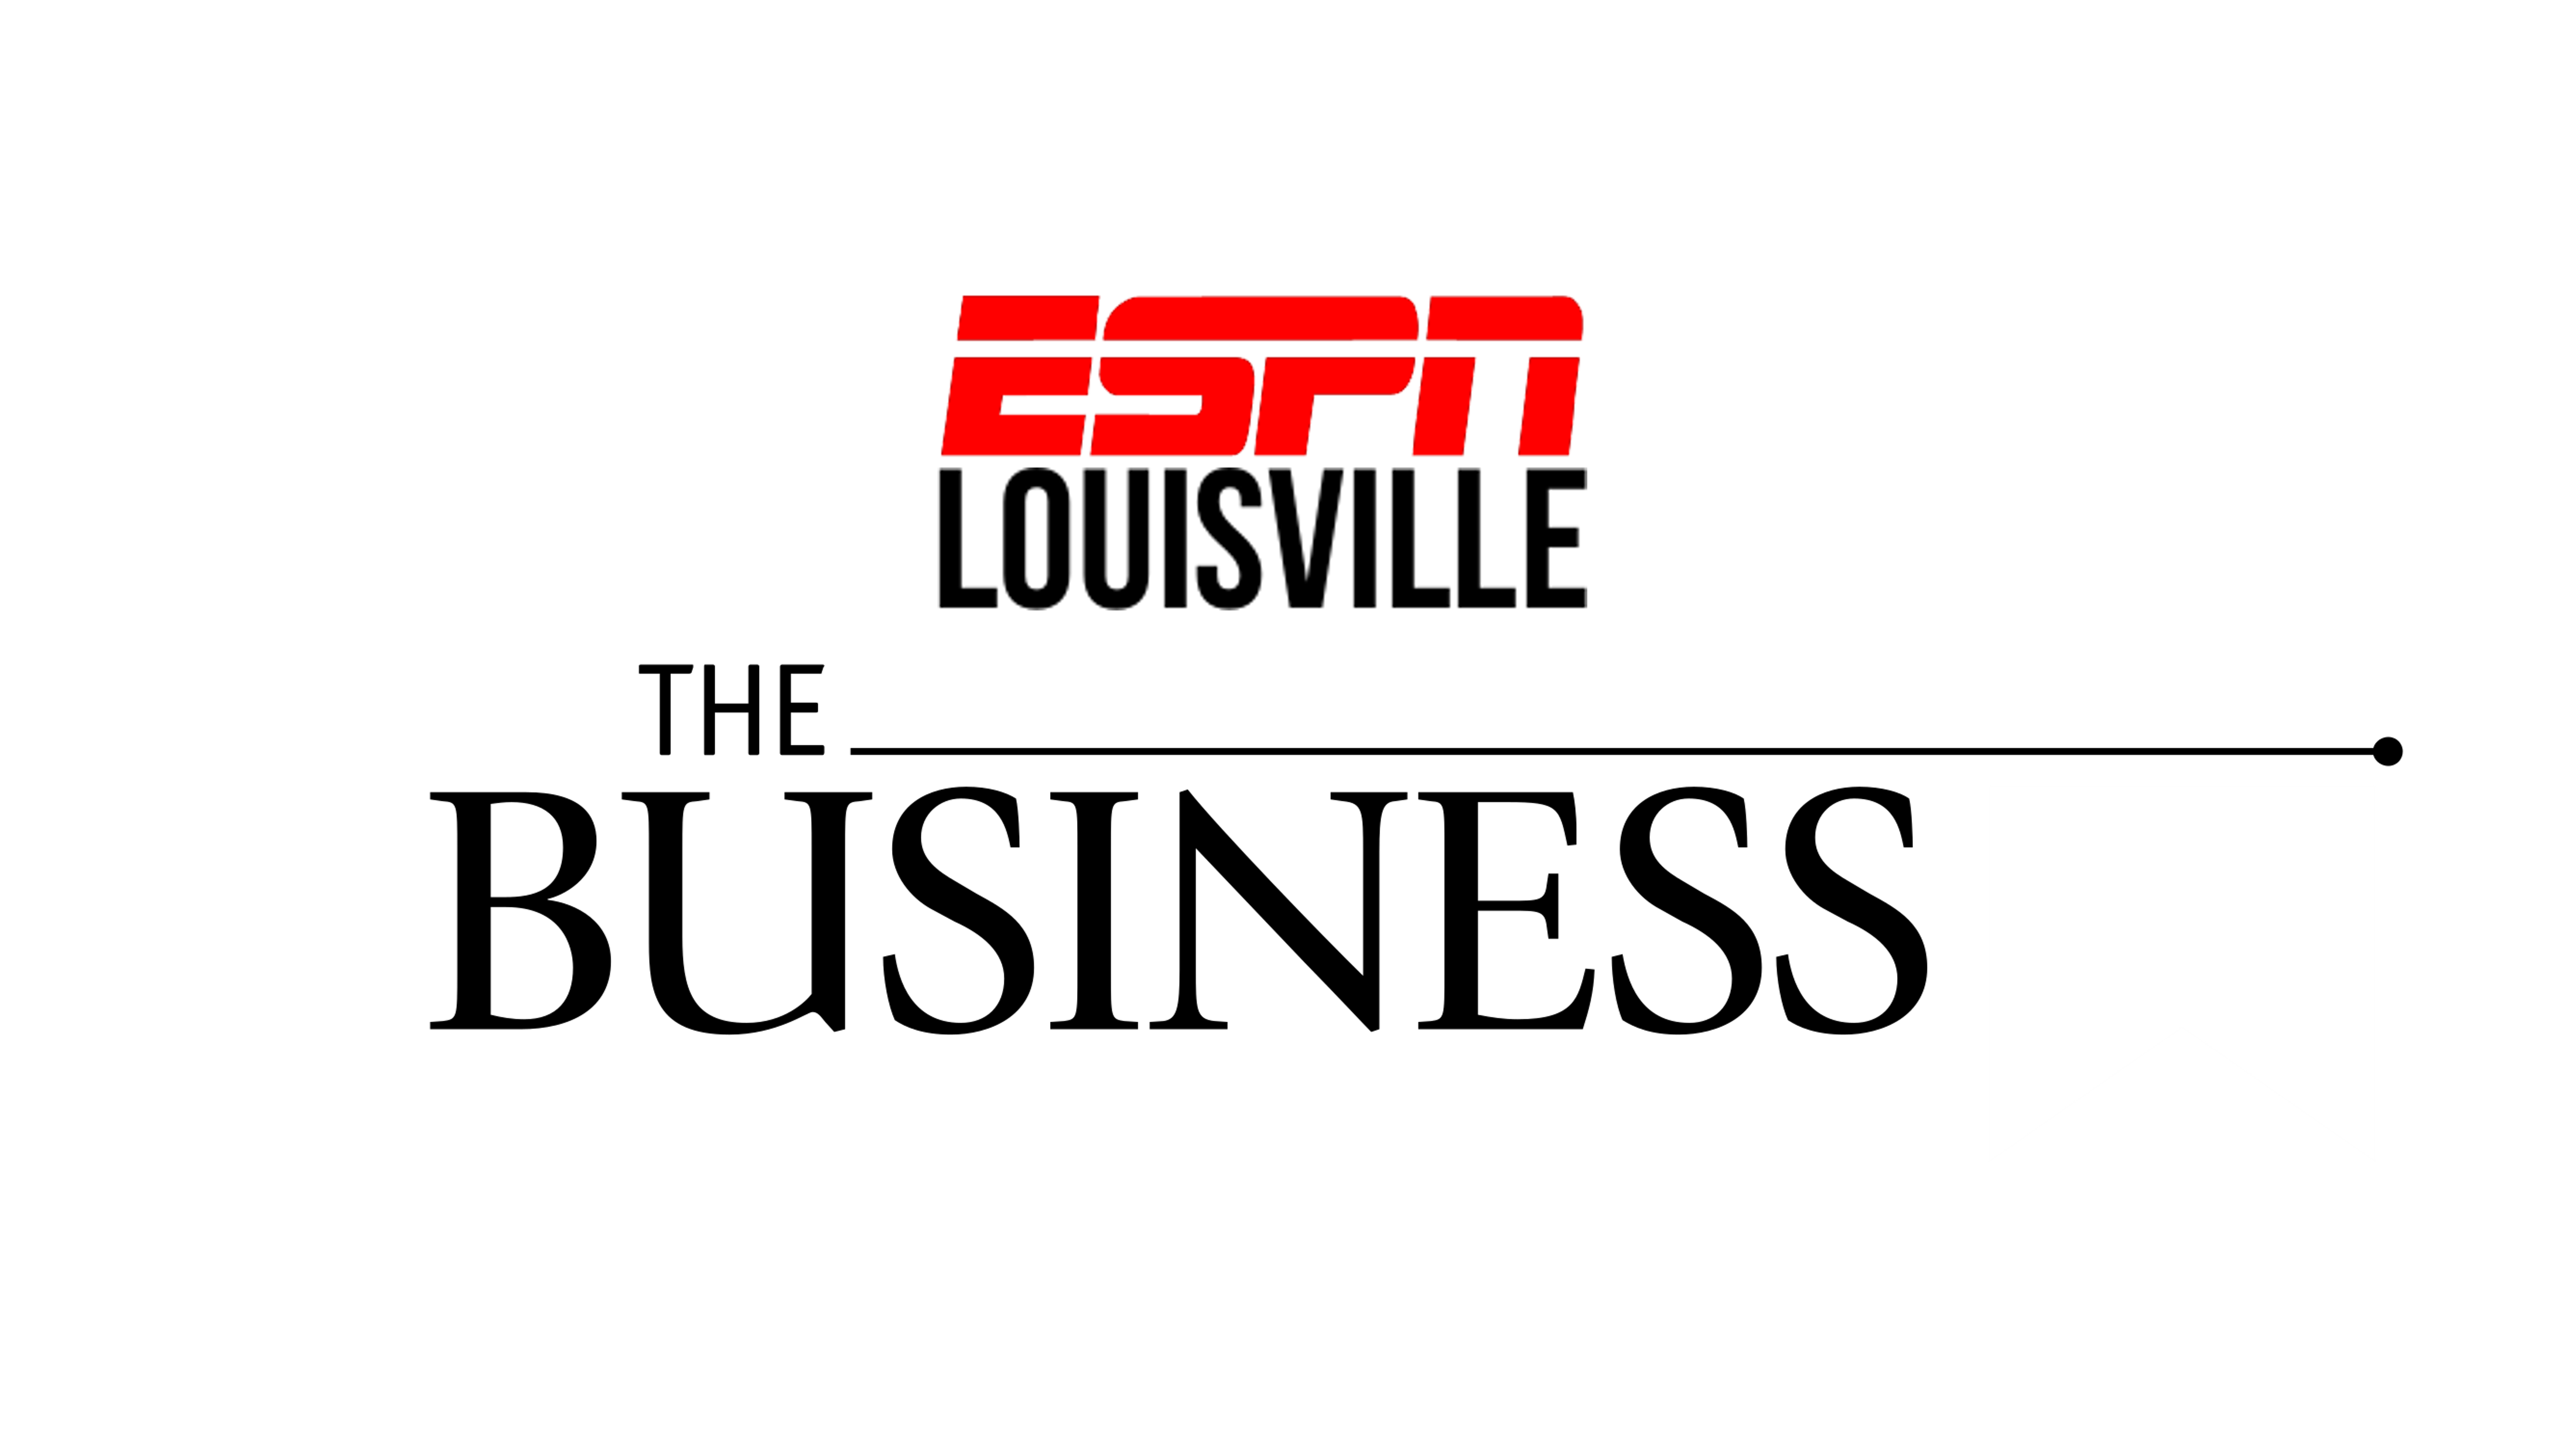 ESPN Louisville ‘The Business’ Rundown